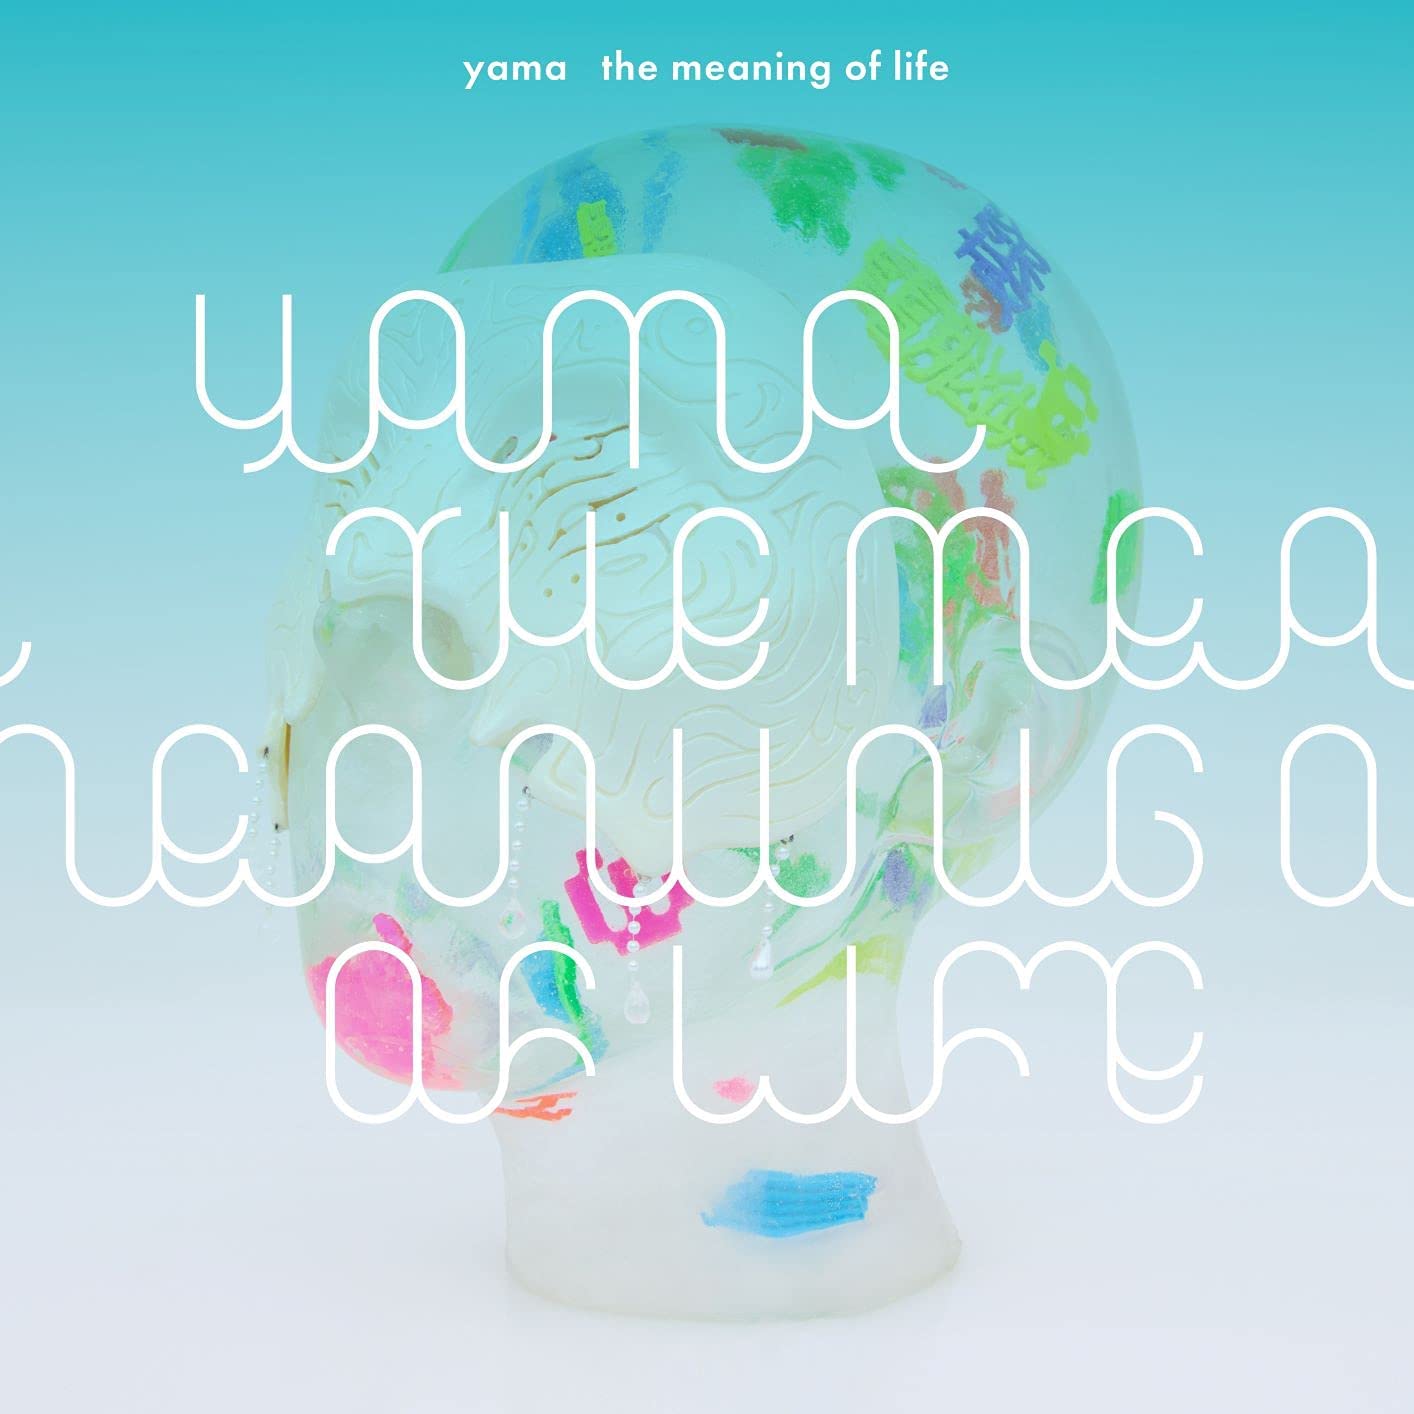 the meaning of life (初回生産限定盤) - yama - Utaite Database